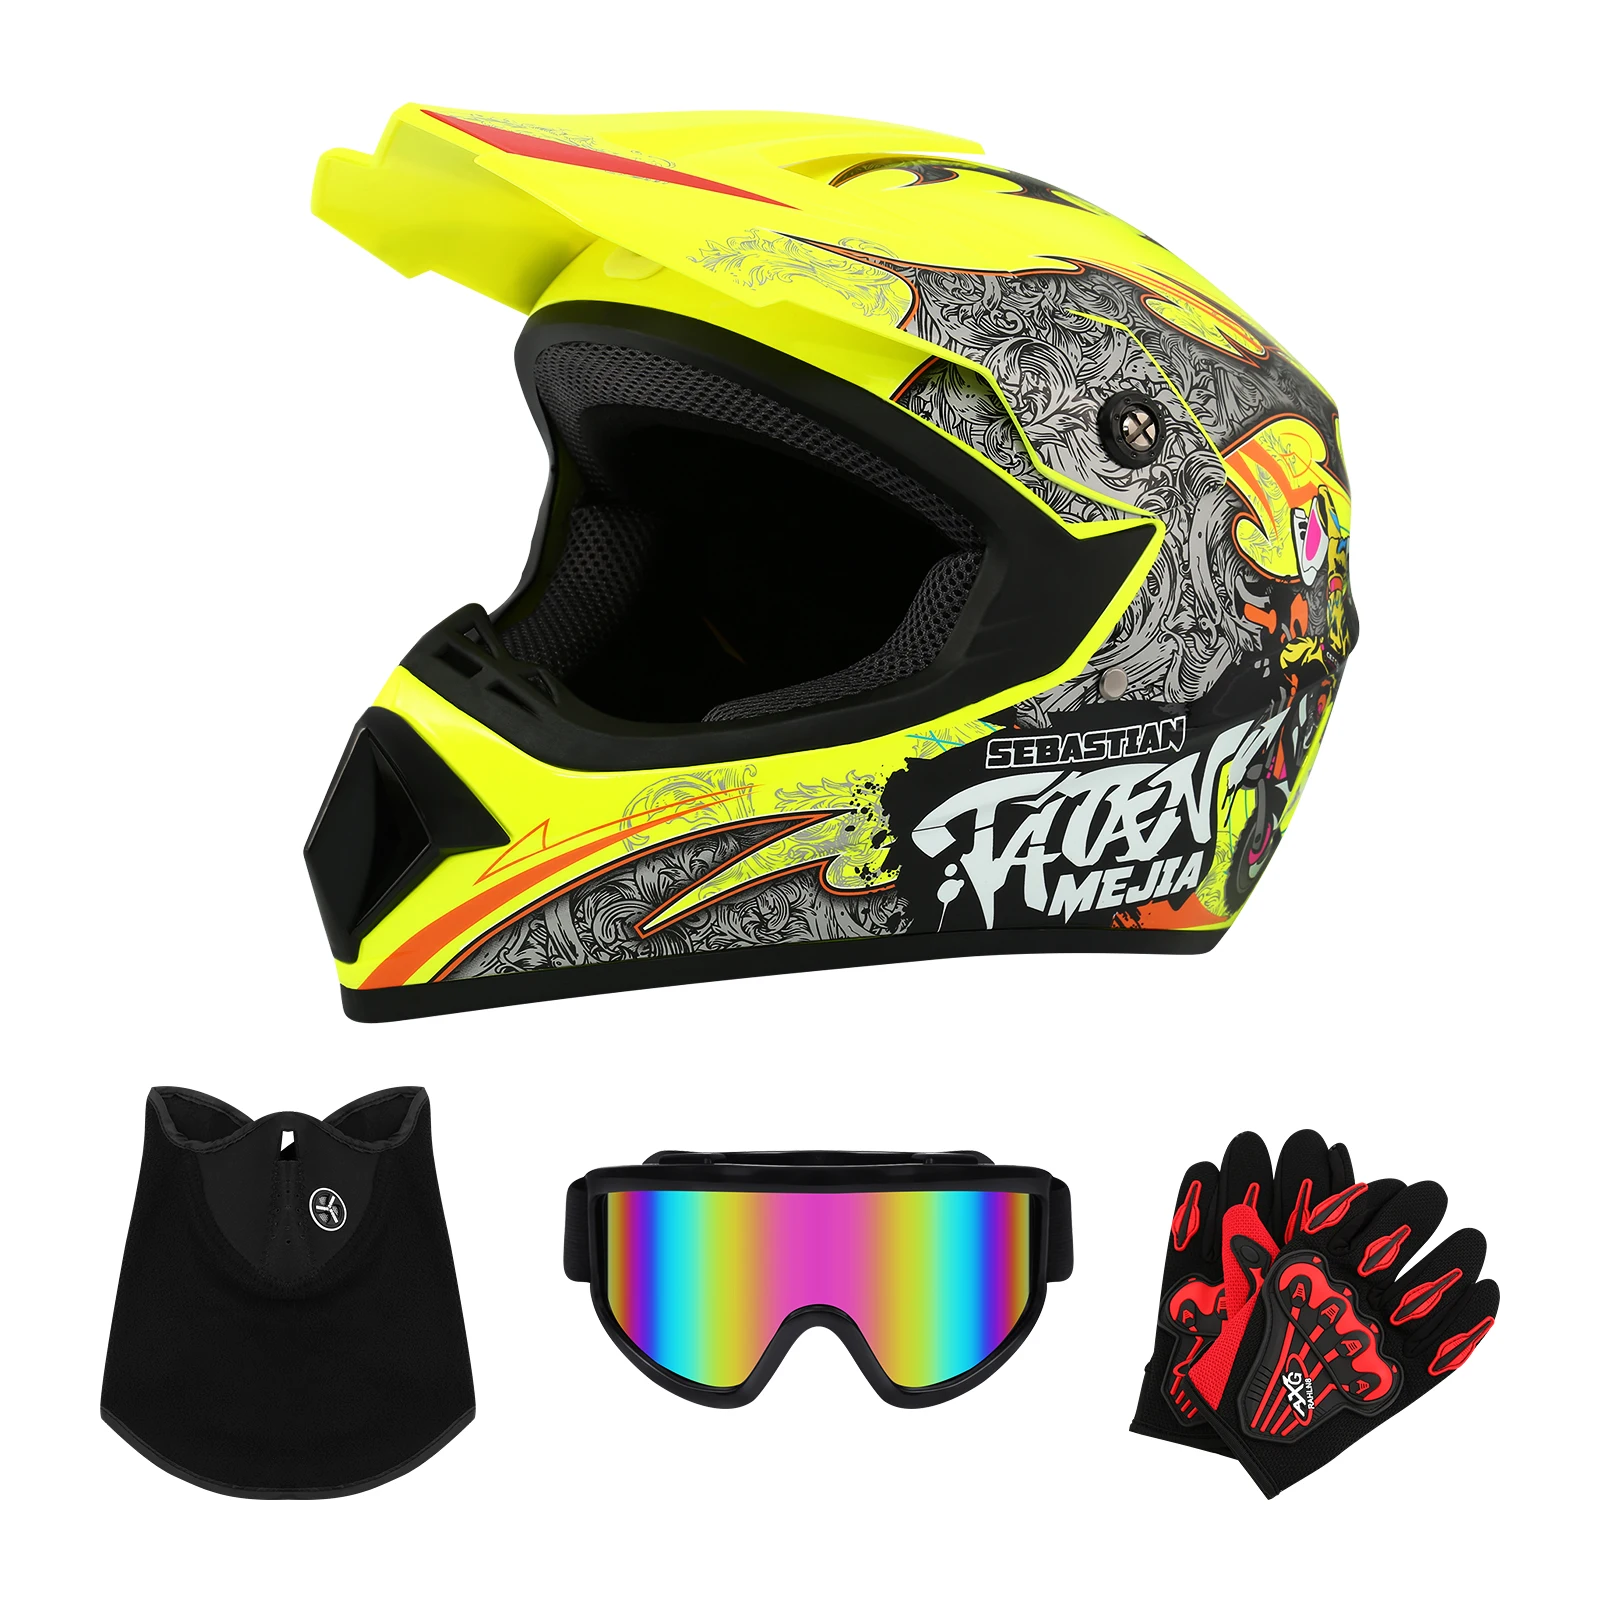 Professional Racing Helmet Set Motocross Casque Hors Route Capacete Moto Casco Off-road Motorcycle Headpiece ATV Goggles+Gloves